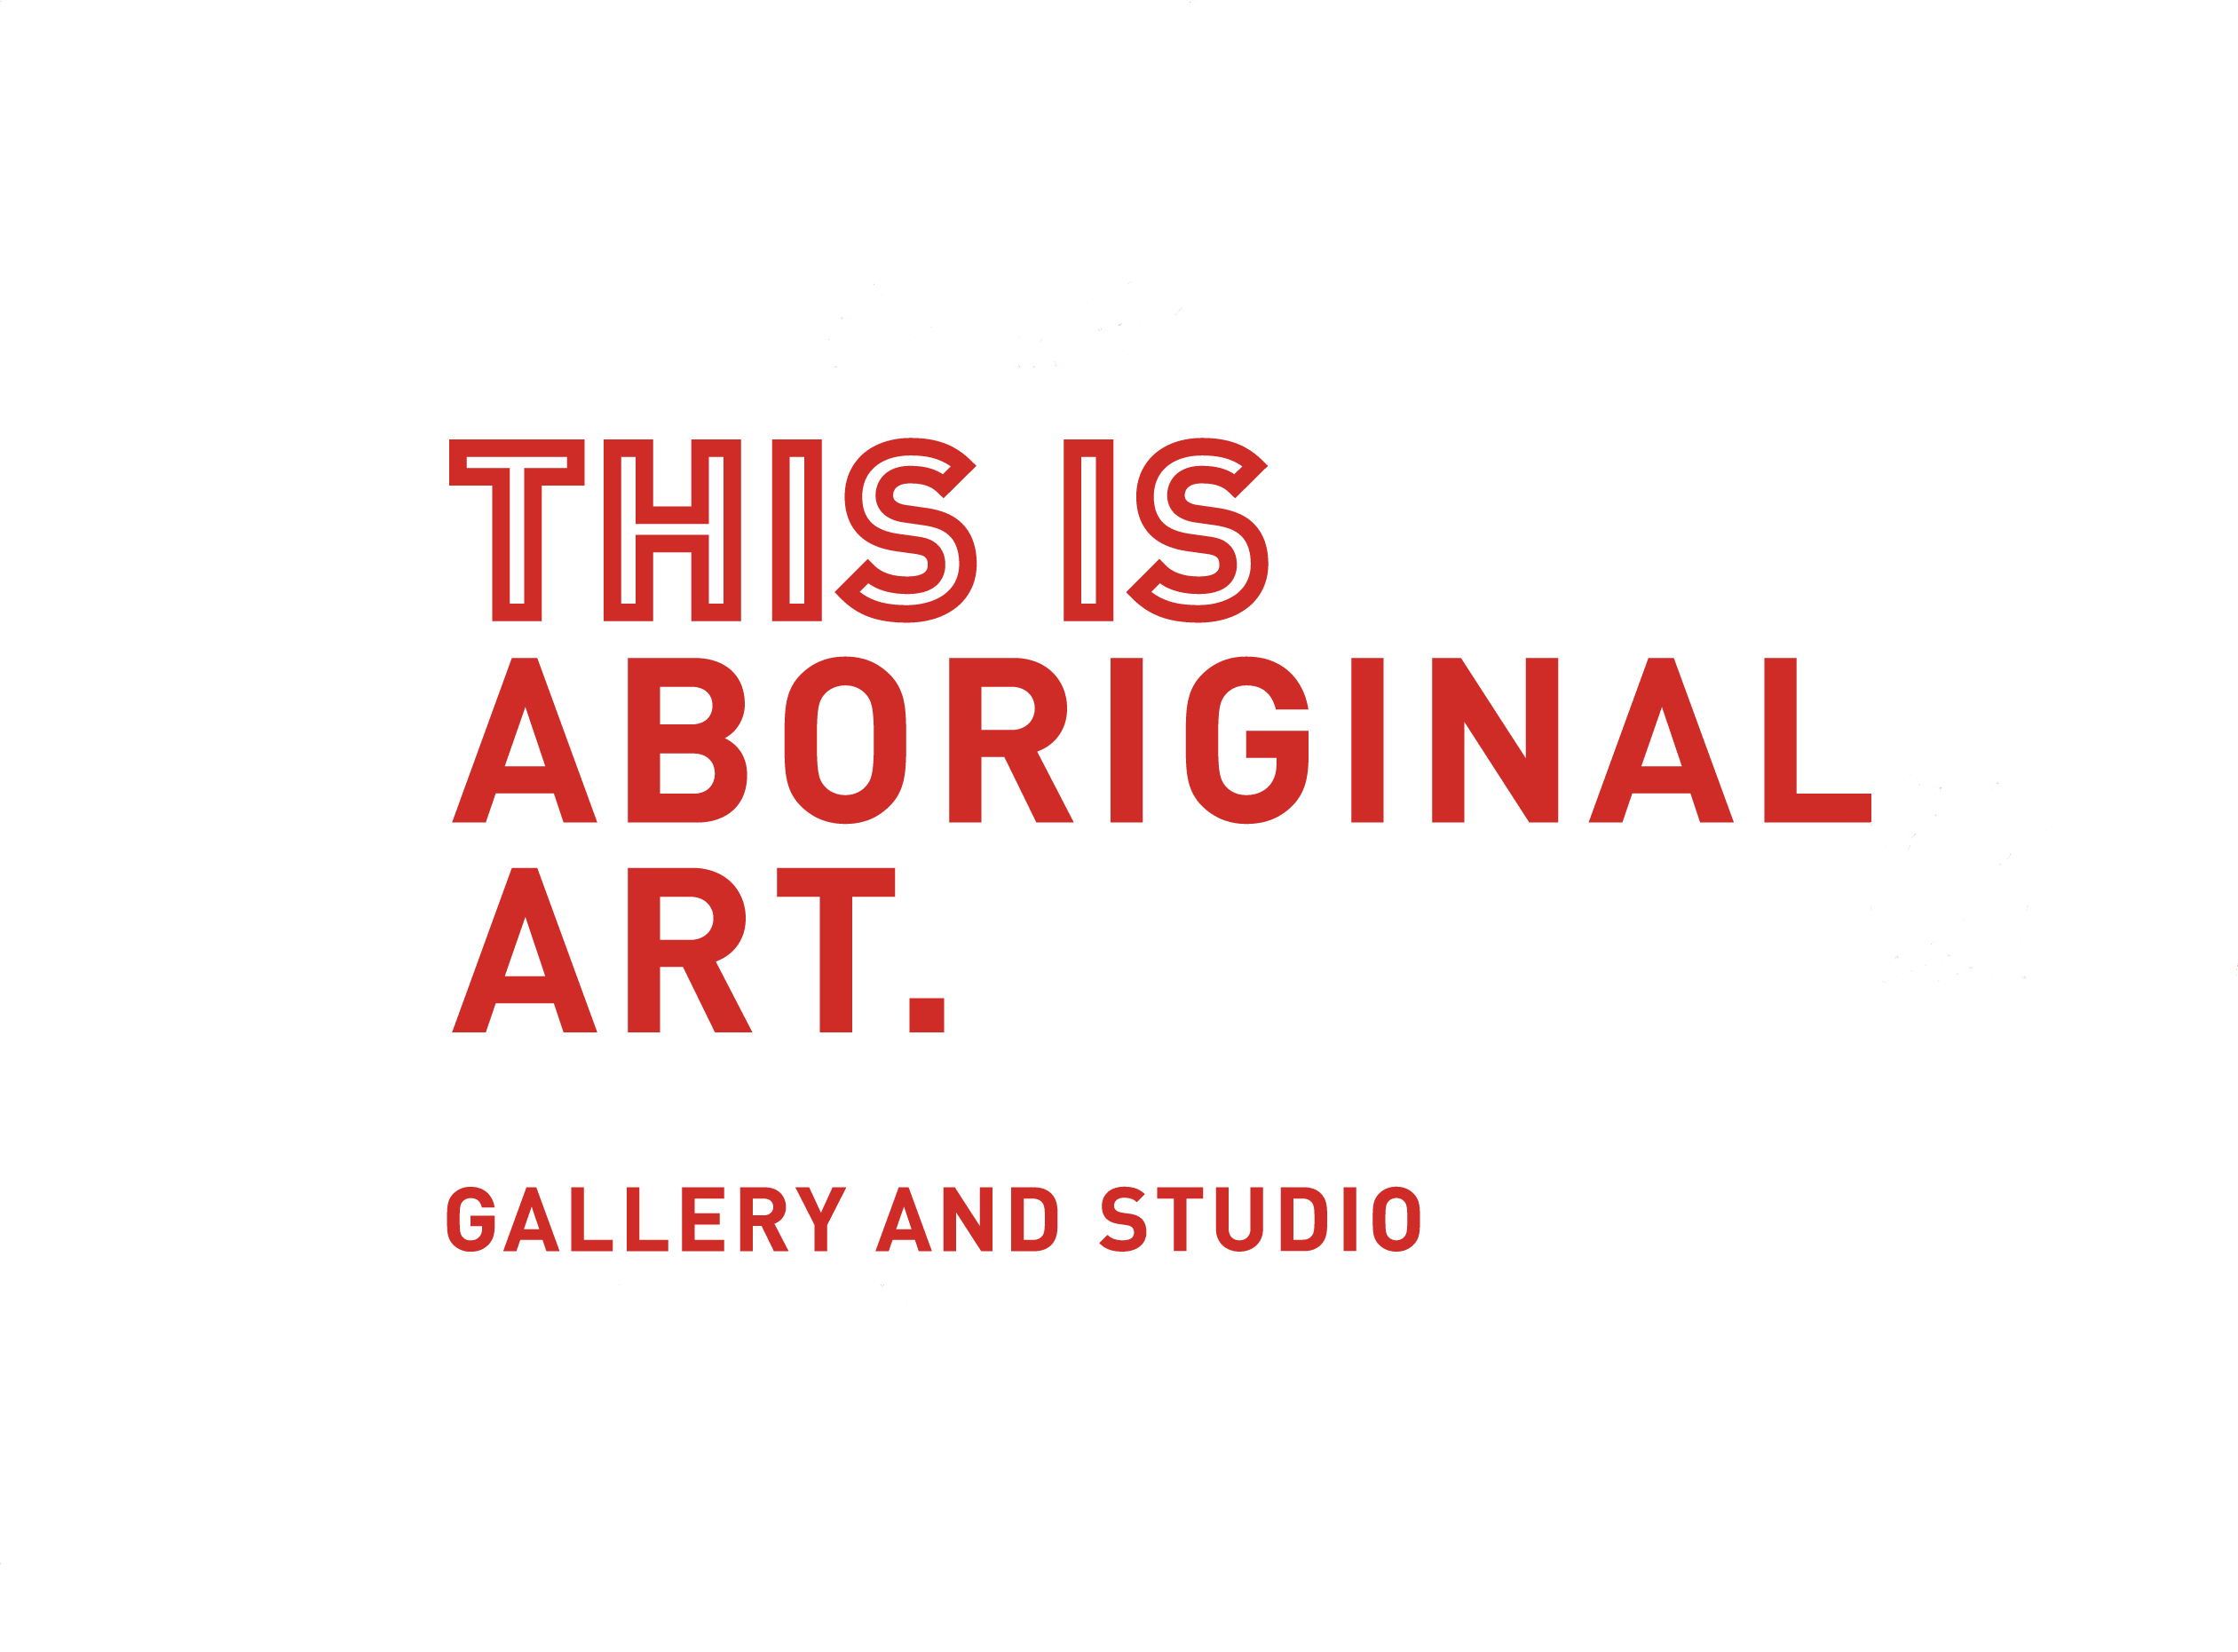 This is Aboriginal Art company logo